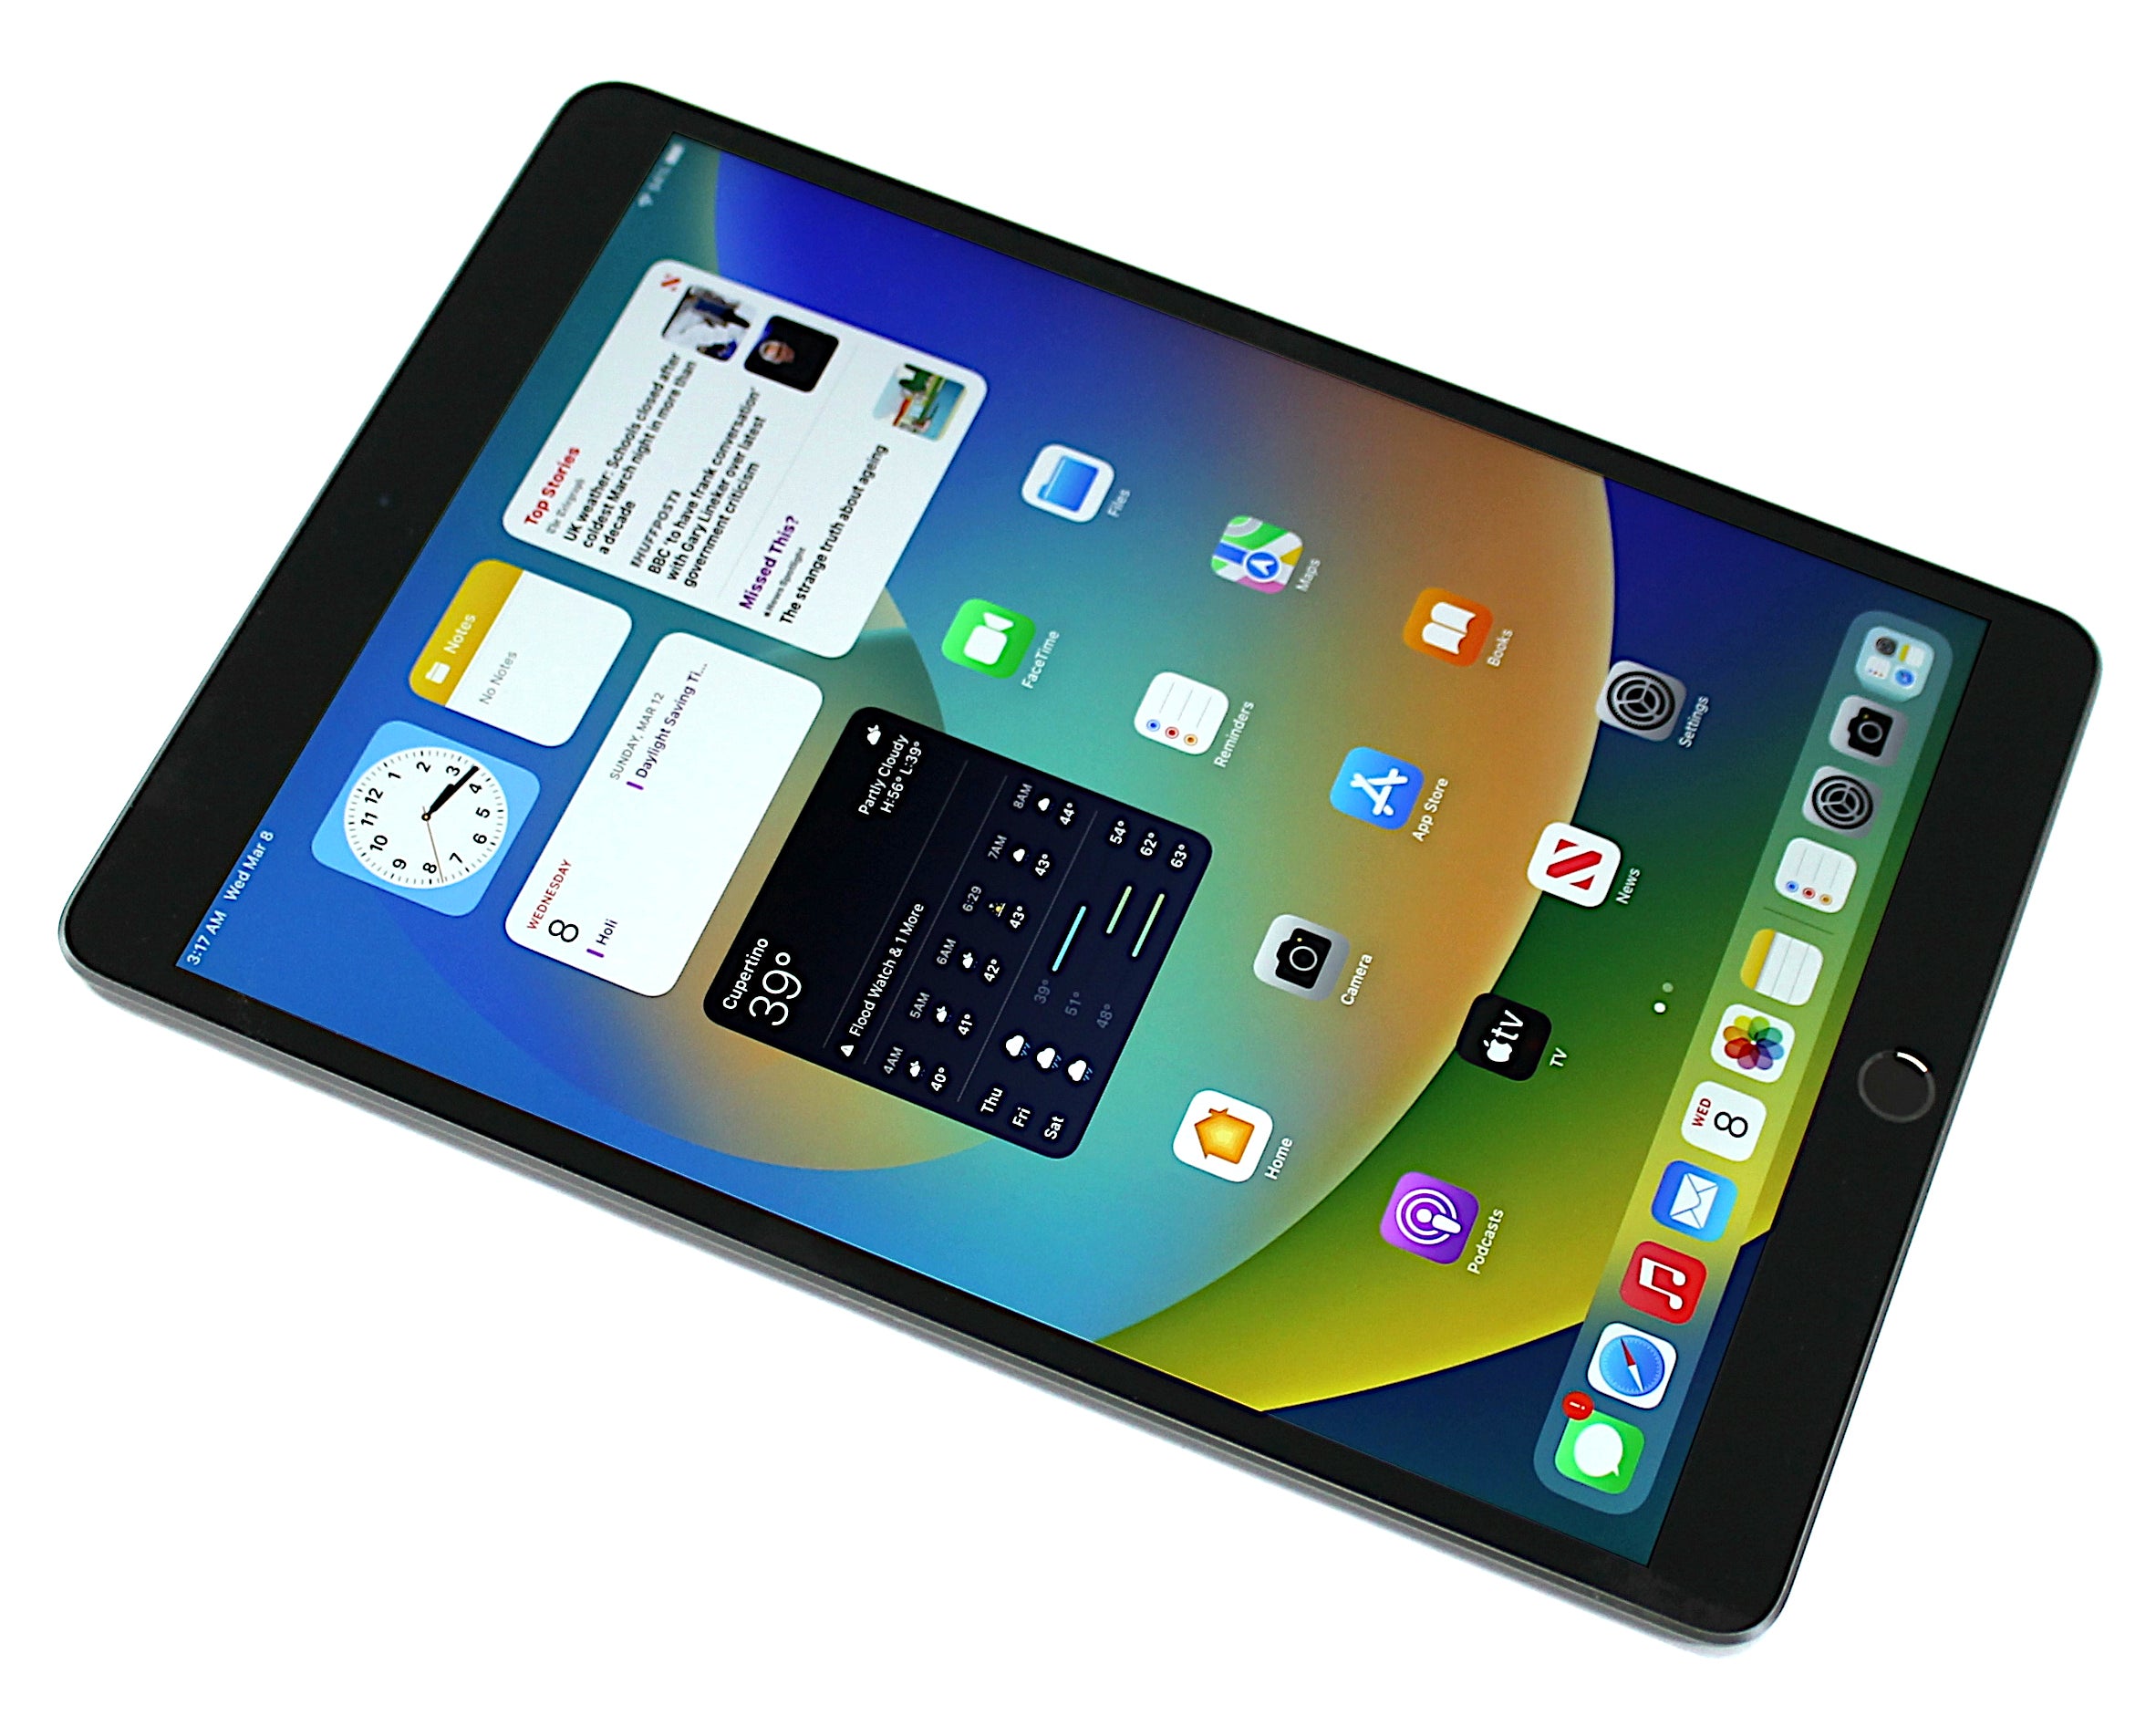 Apple iPad Air 3rd Generation Tablet, A2152, 64GB, WiFi, Space Grey